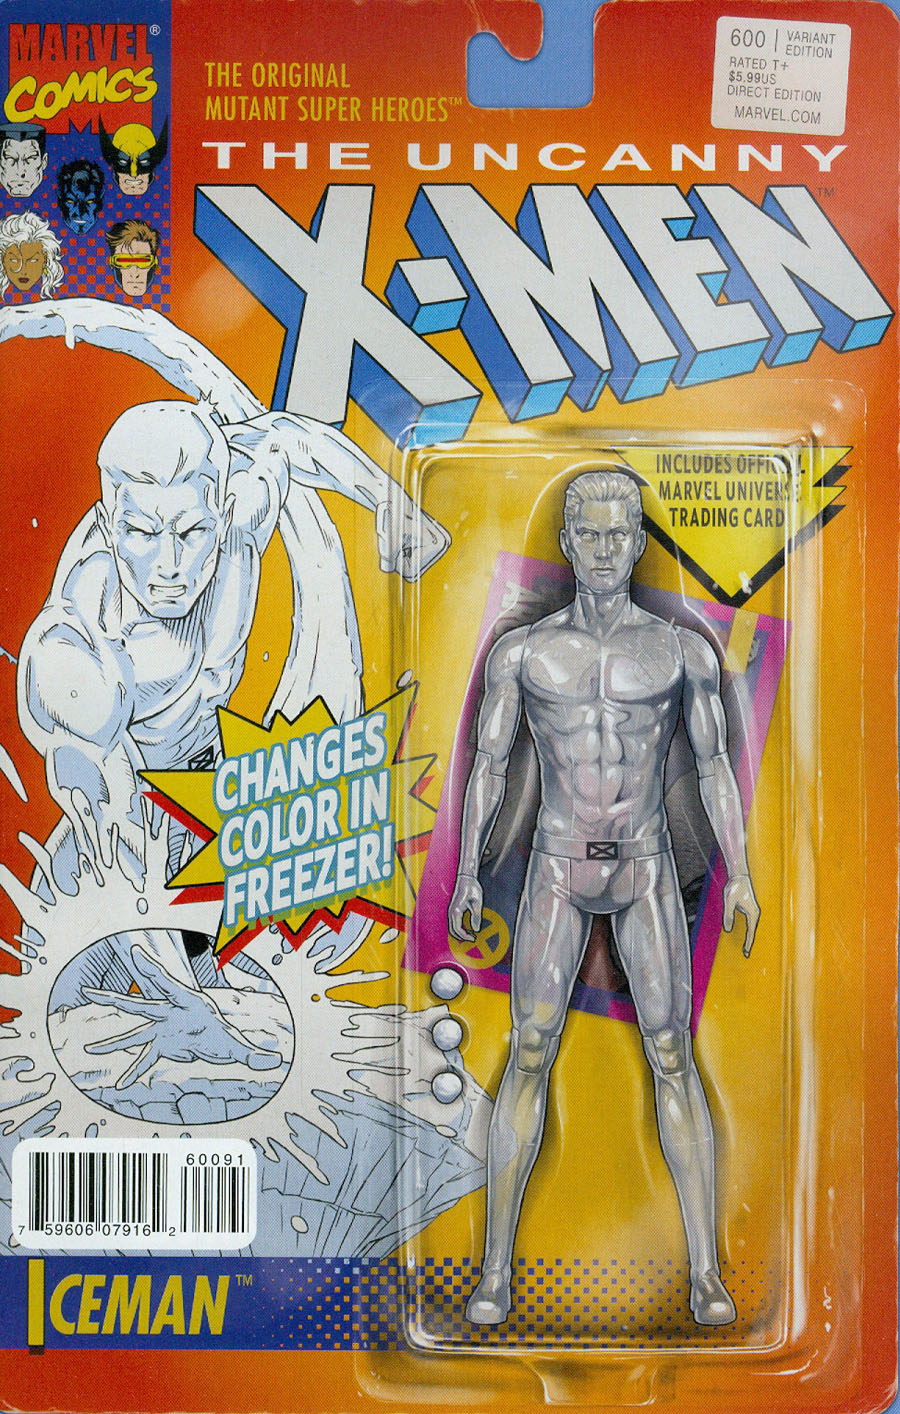 Uncanny X-Men Vol 3 #600 Cover C Variant John Tyler Christopher Action Figure B Cover